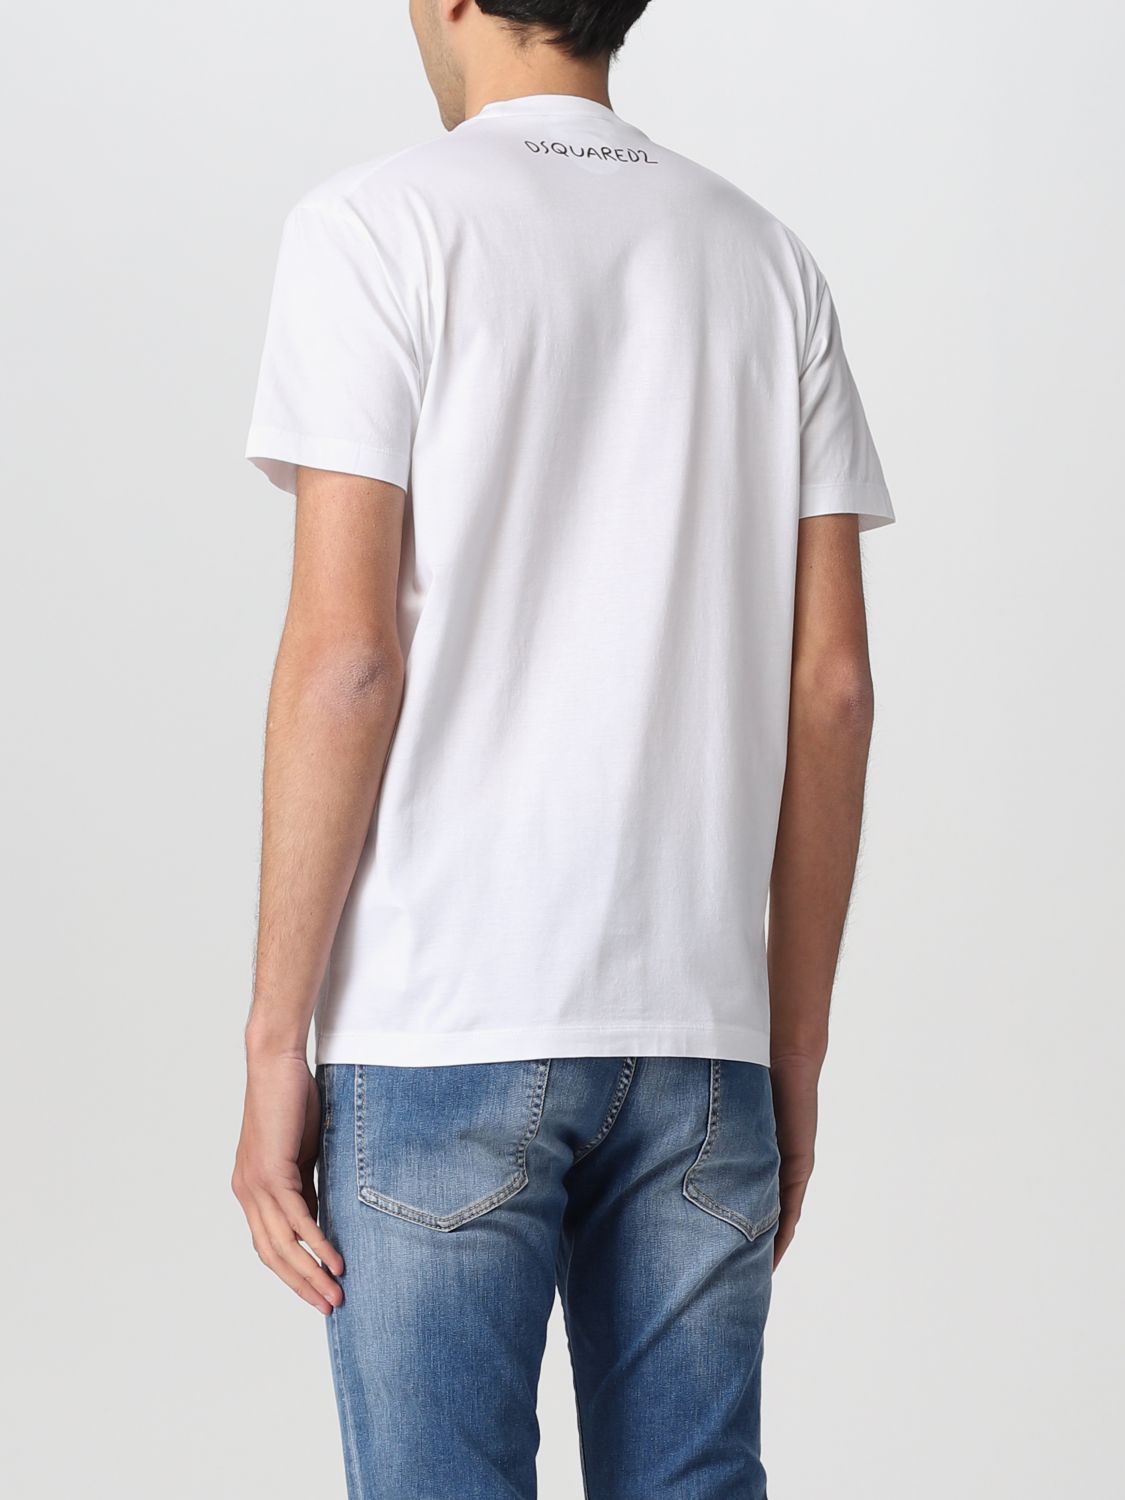 DSQUARED2: Ceresio 9 Cool cotton t-shirt | T-Shirt Dsquared2 Men 